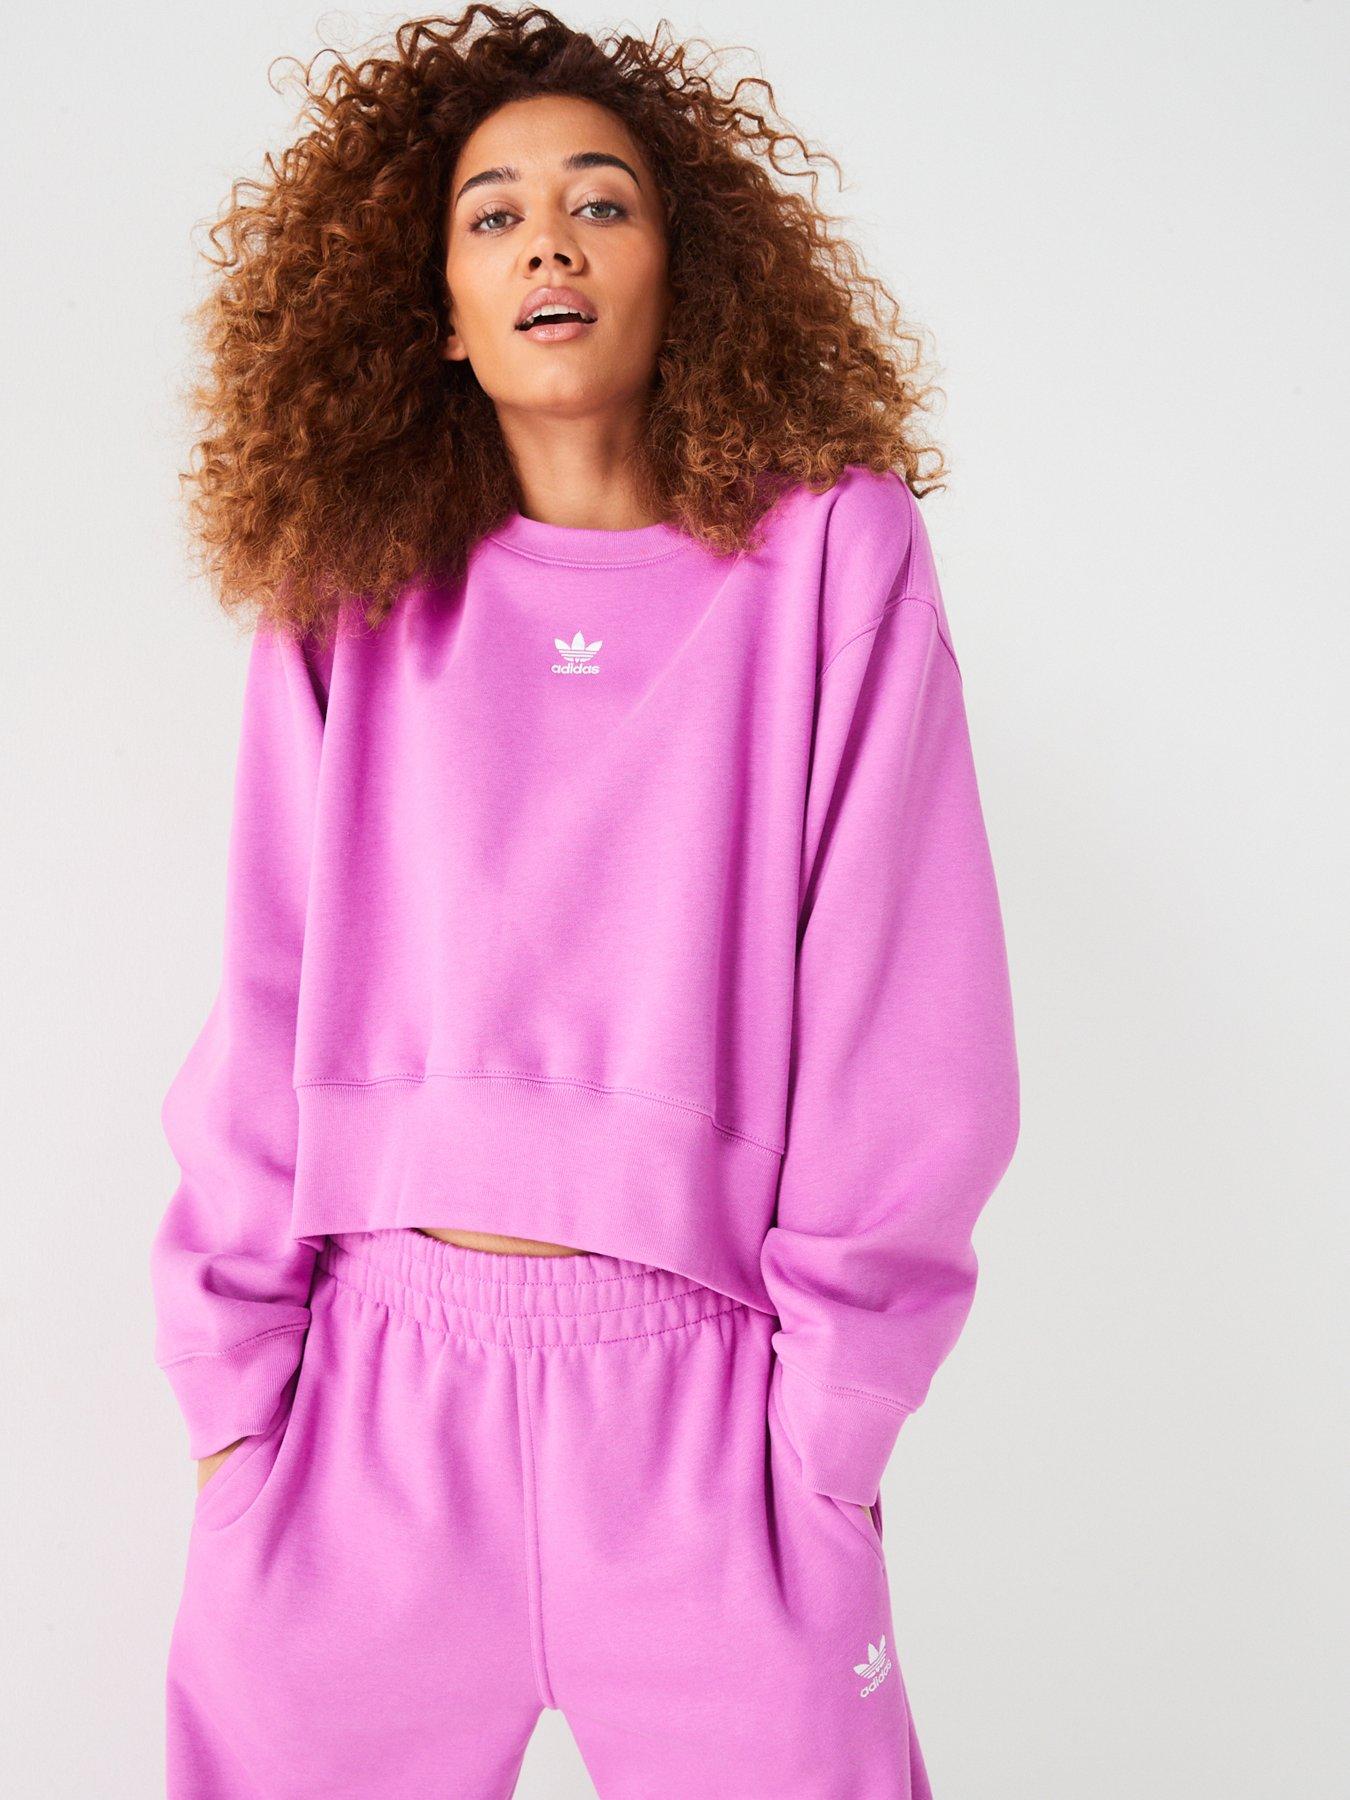 adidas Originals Womens Sweatshirt - Pink, Pink, Size Xs, Women